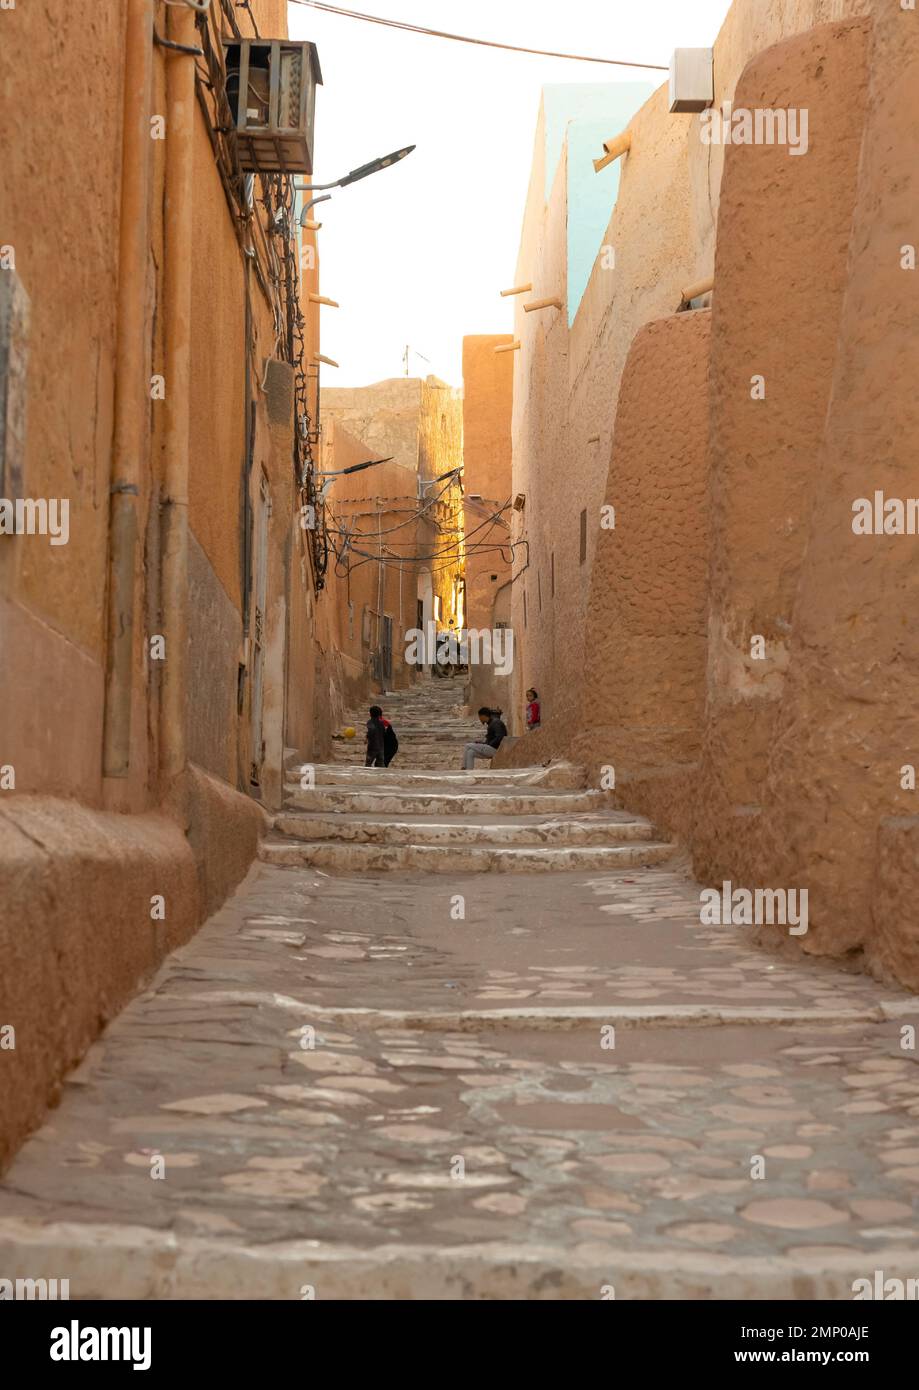 Street in Ksar Beni Isguen, North Africa, Ghardaia, Algeria Stock Photo